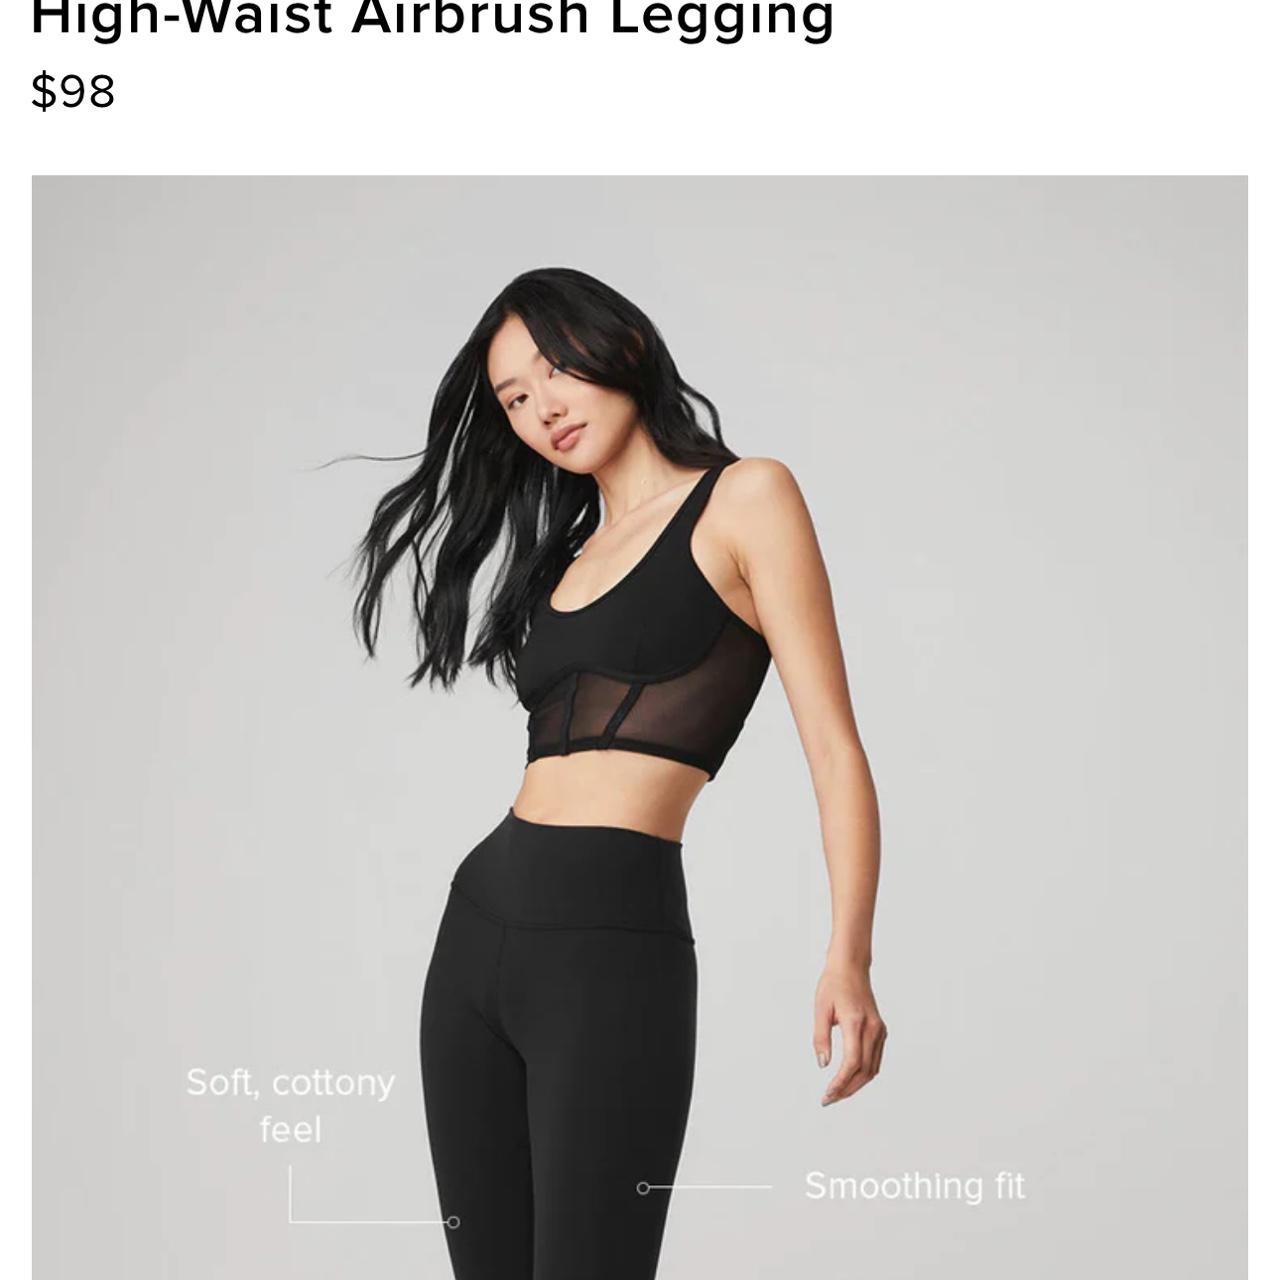 Alo Yoga High-Waist Airbrush Leggings 7/8. - Depop